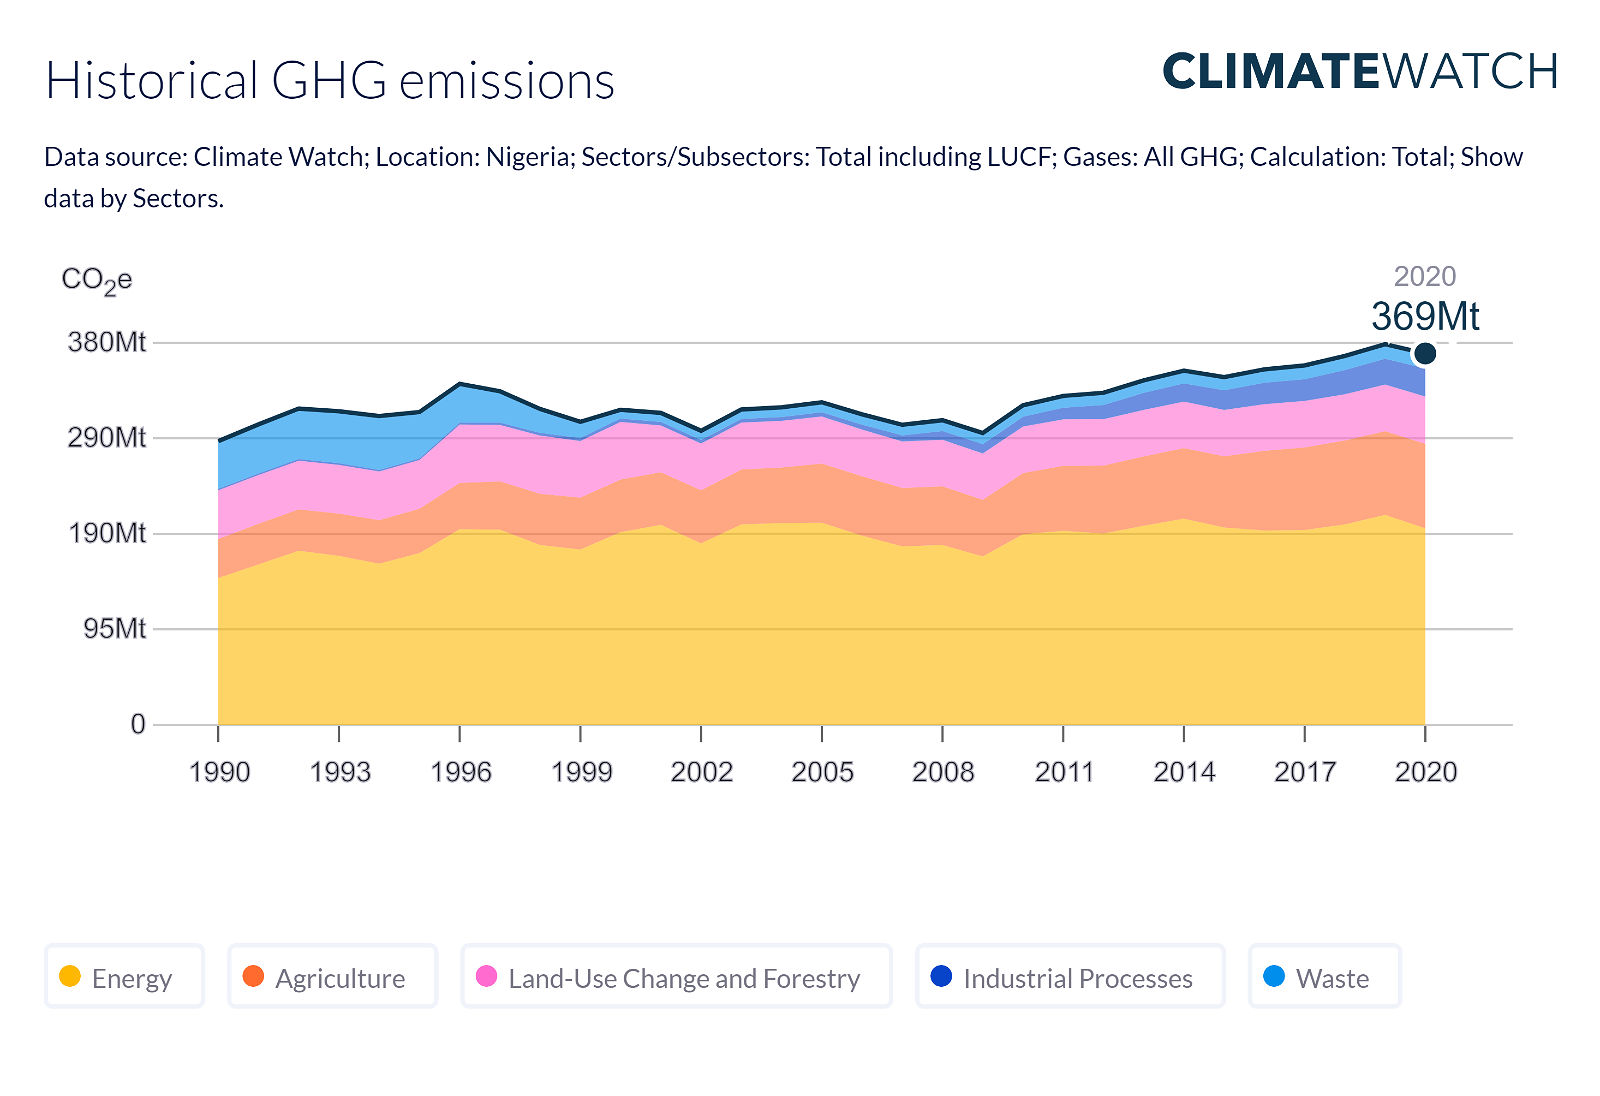 Historical GHG emissions in Nigeria